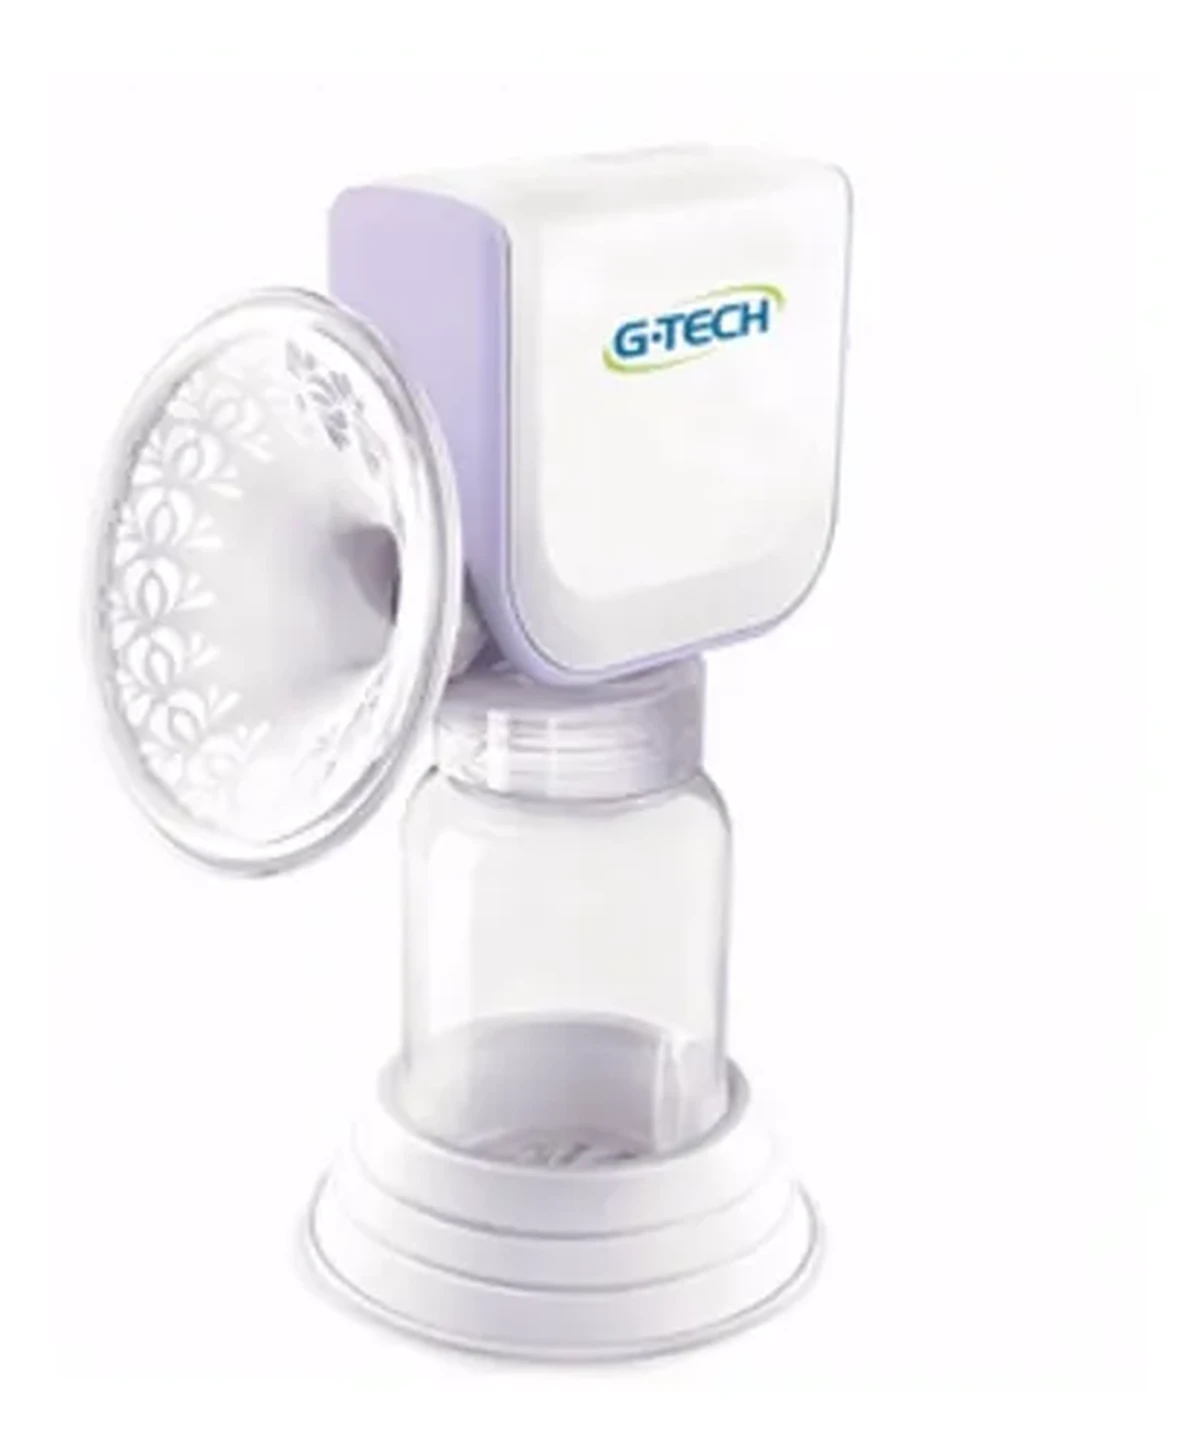 Foto do produto Bomba Tira leite Materno Elétrica G-Tech